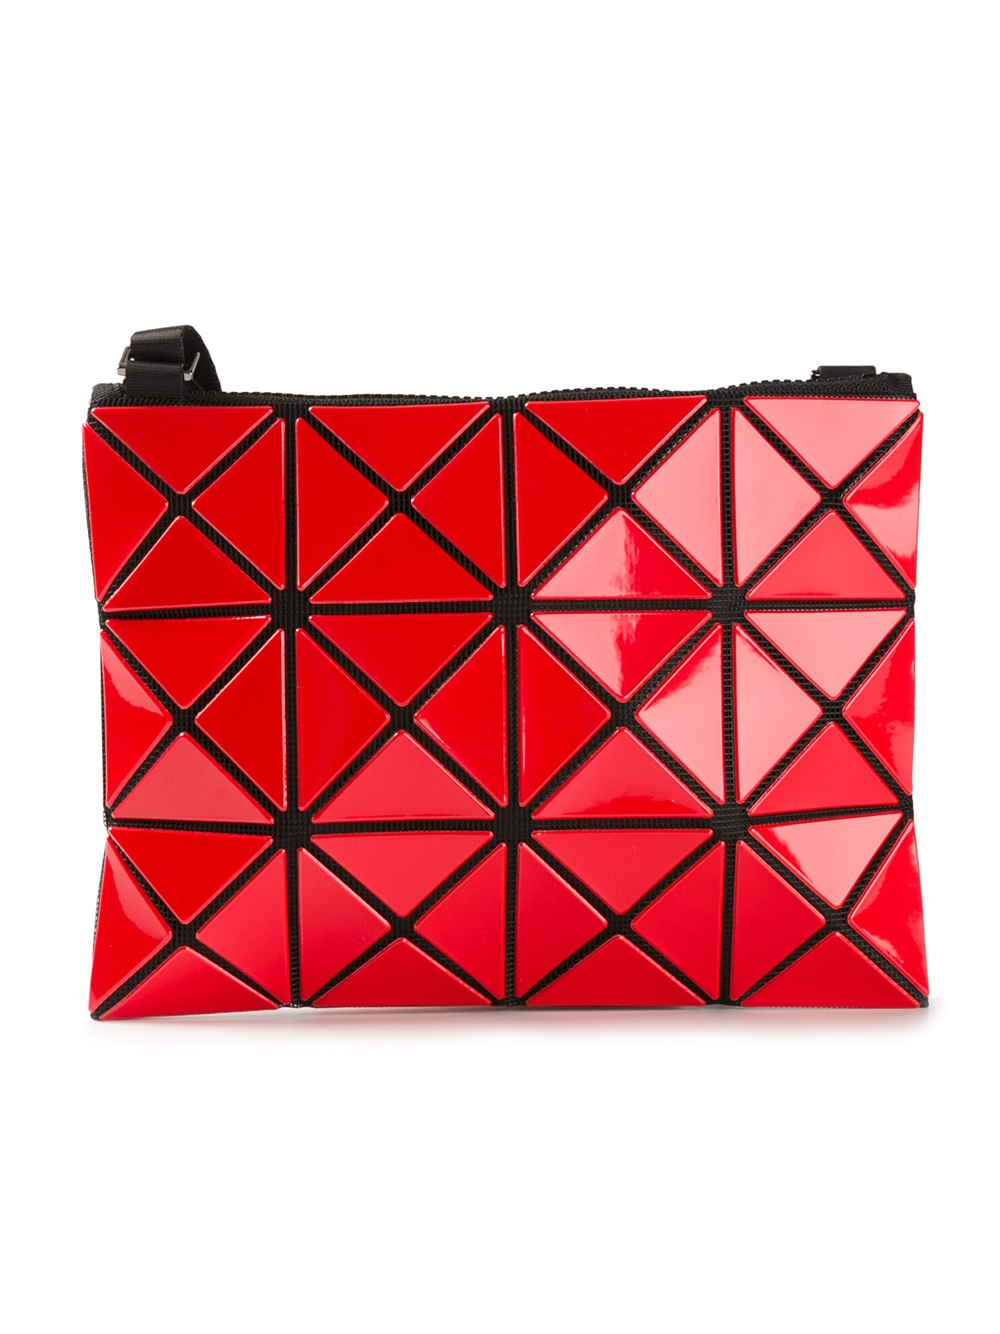 Lyst - Bao Bao Issey Miyake Prism Shoulder Bag in Red